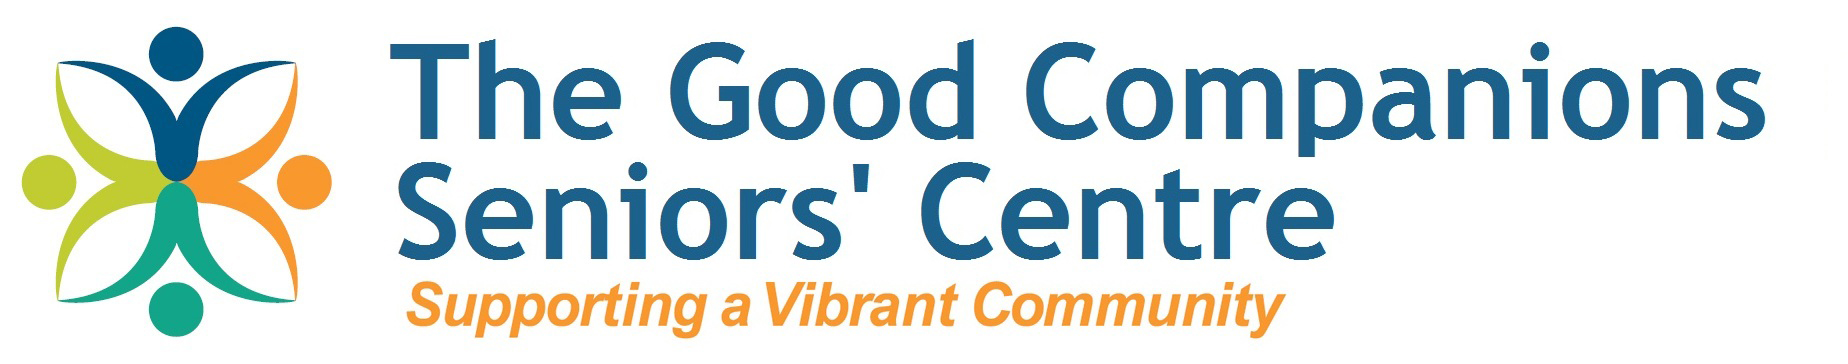 The Good Companion Centre logo